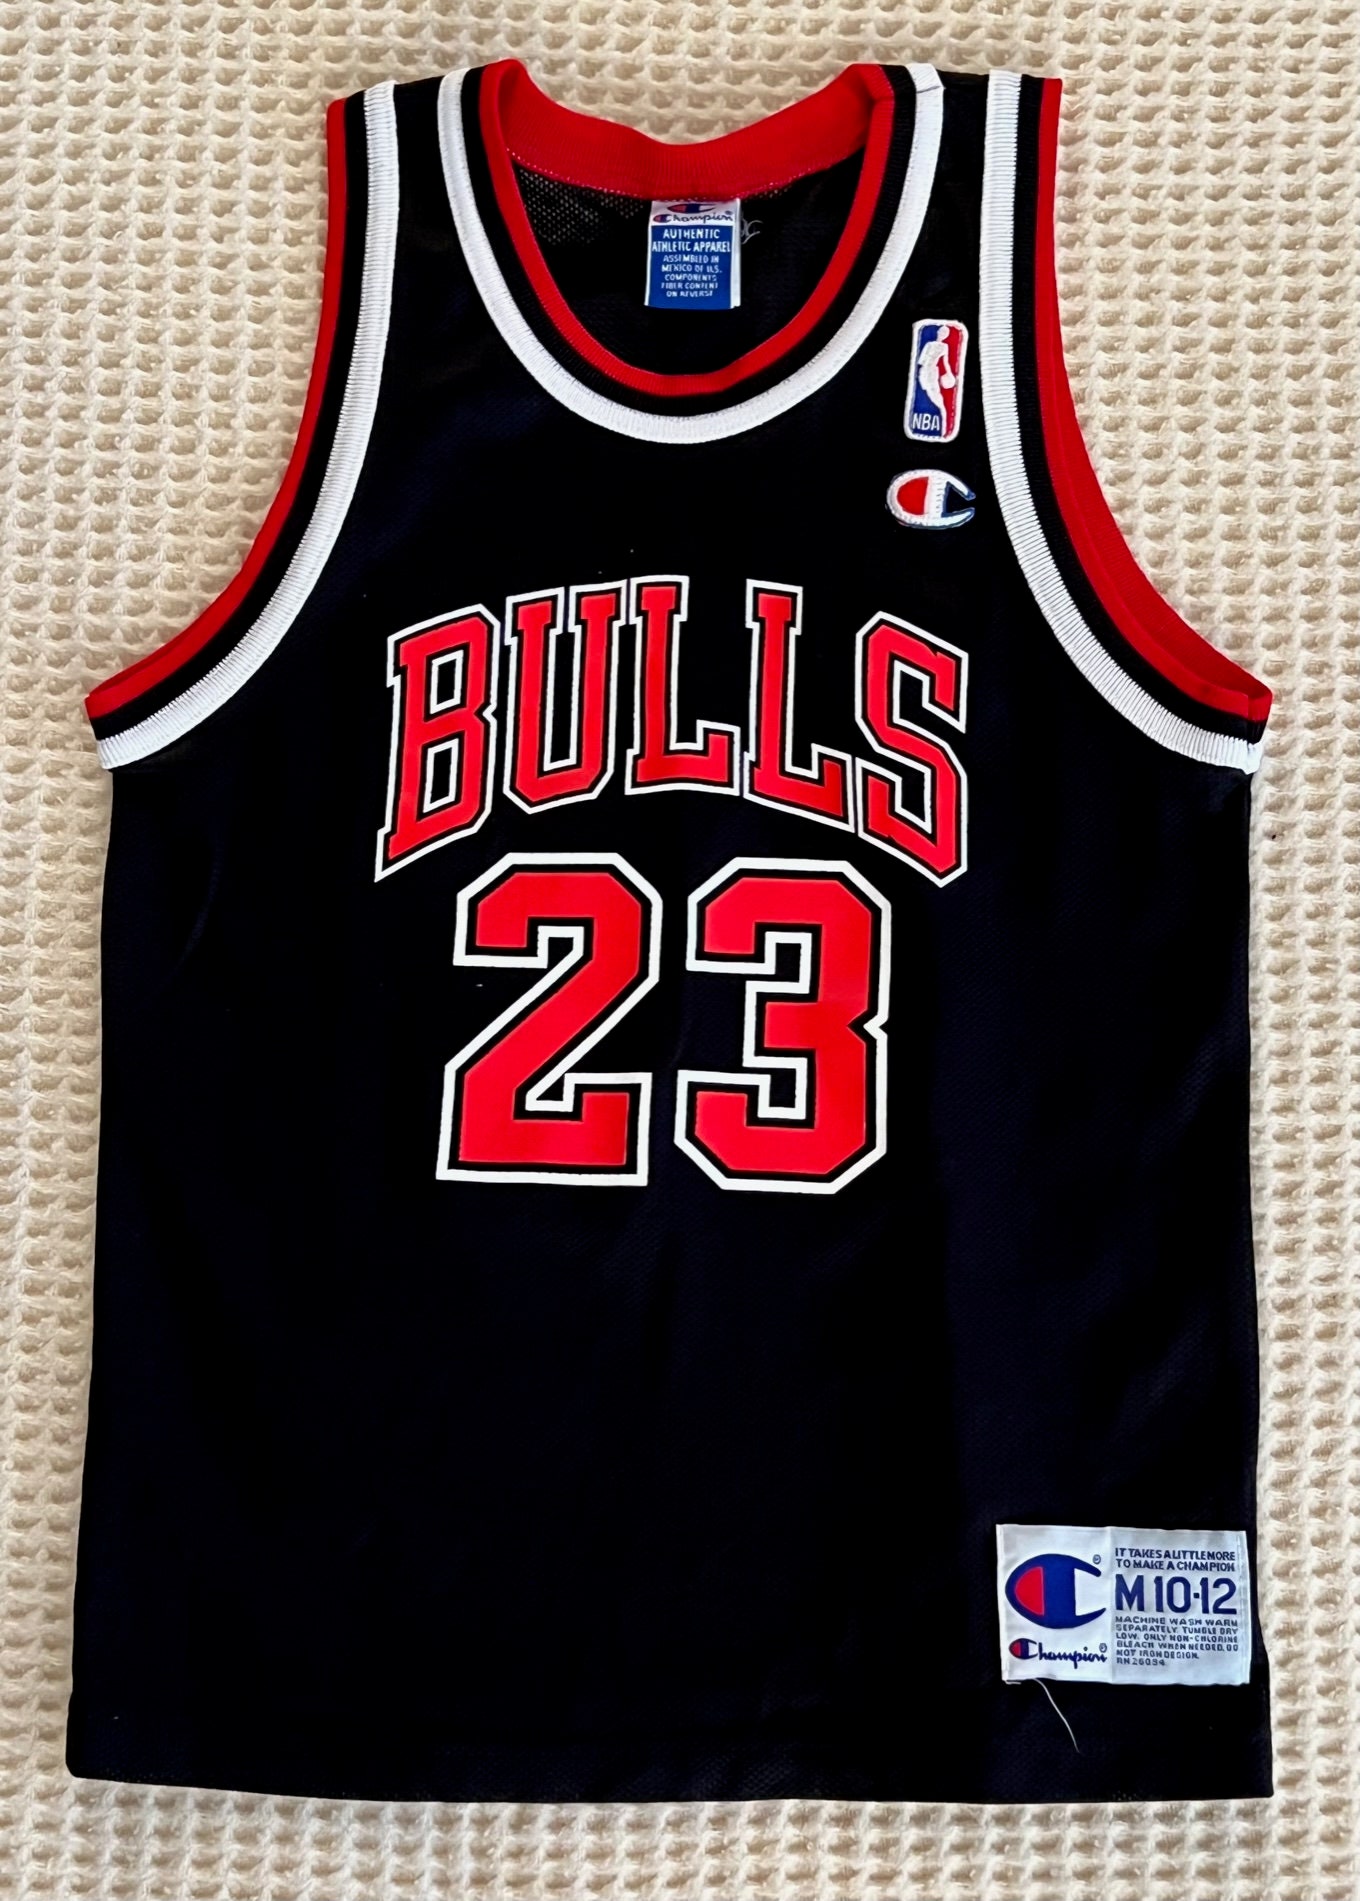 Black Nike NBA Chicago Bulls Swingman Shorts - JD Sports Ireland